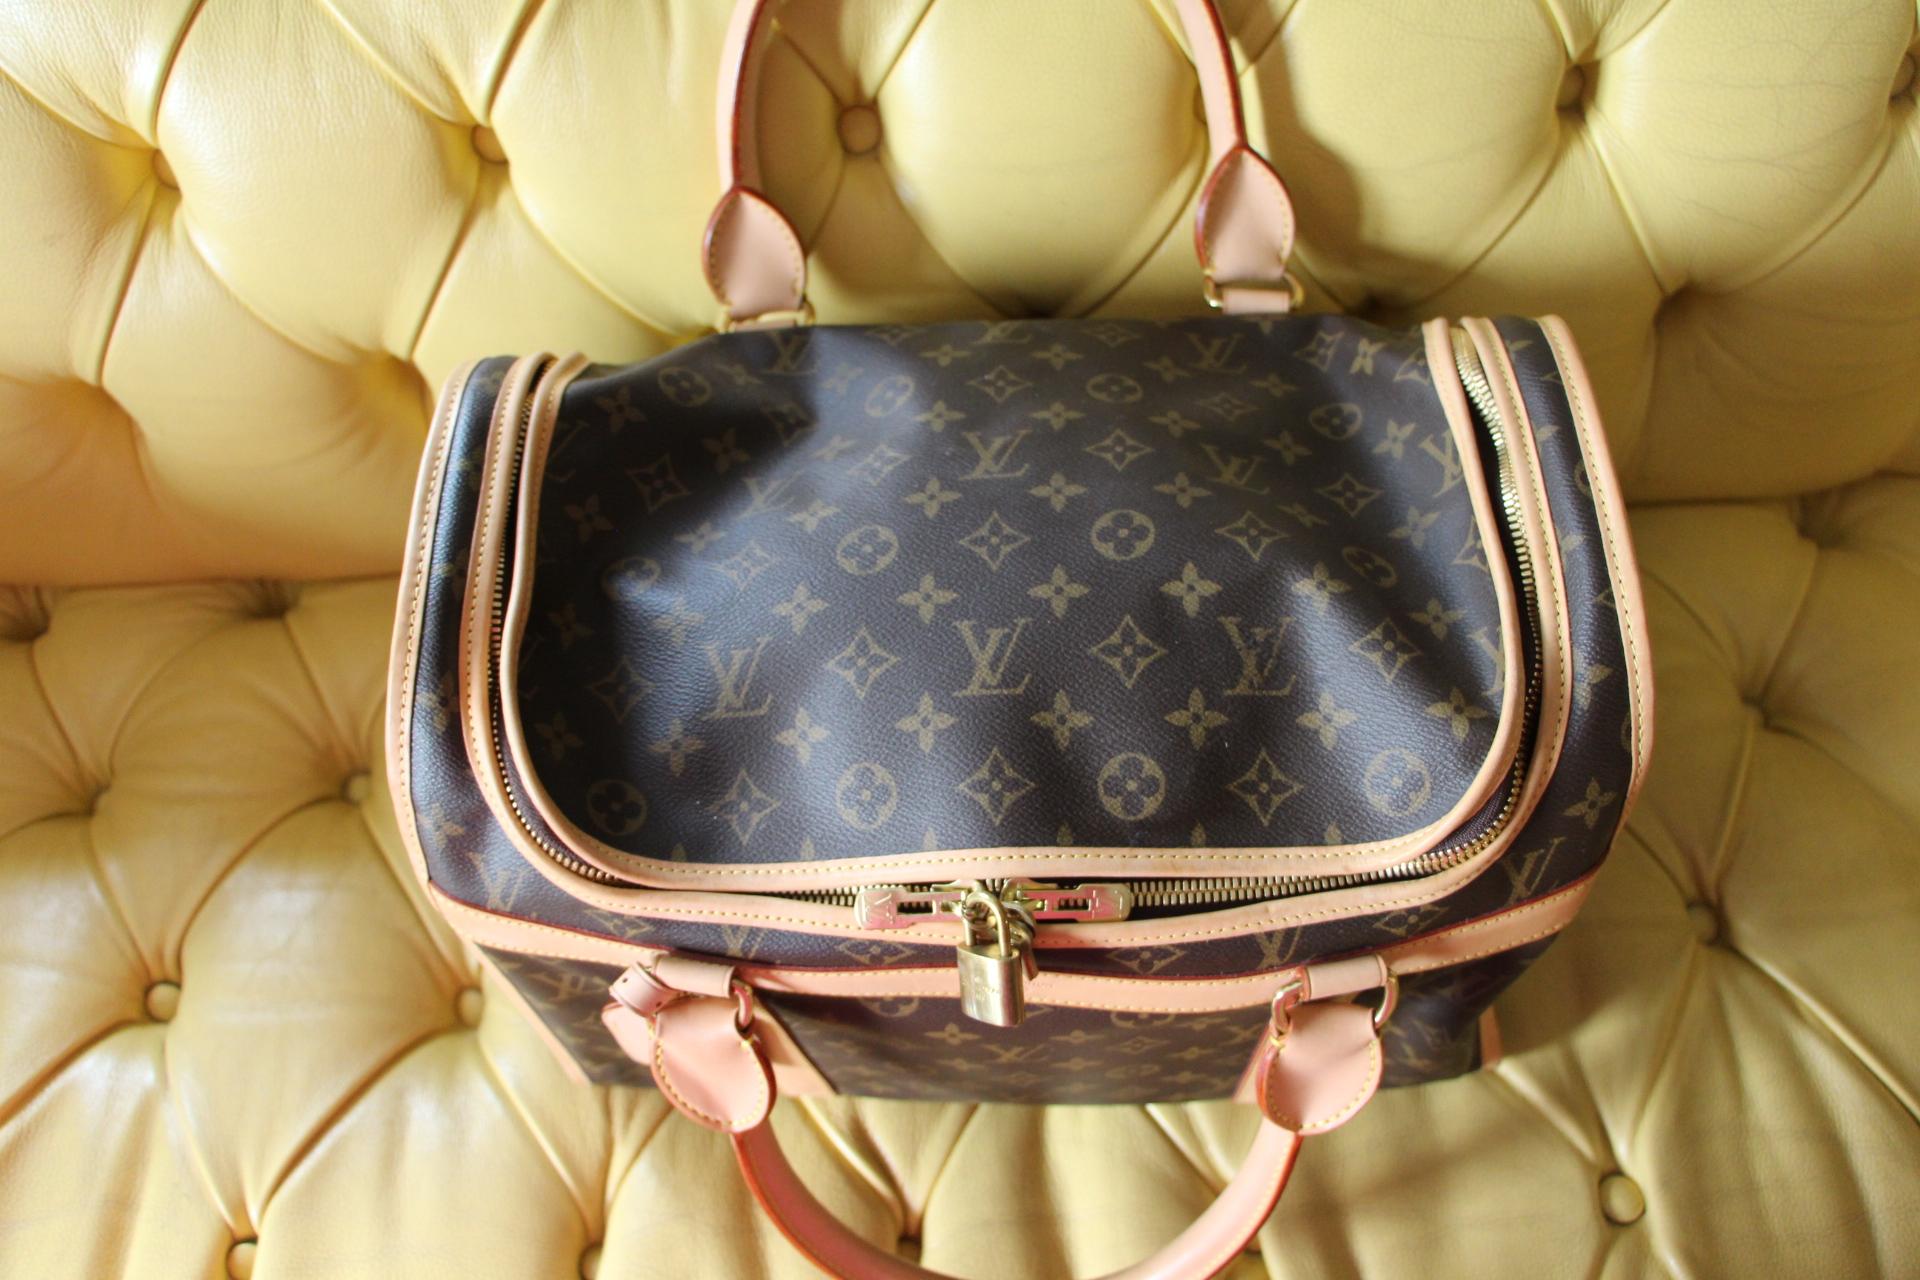 Louis Vuitton Dog Bag 40 cm In Good Condition For Sale In Saint-ouen, FR